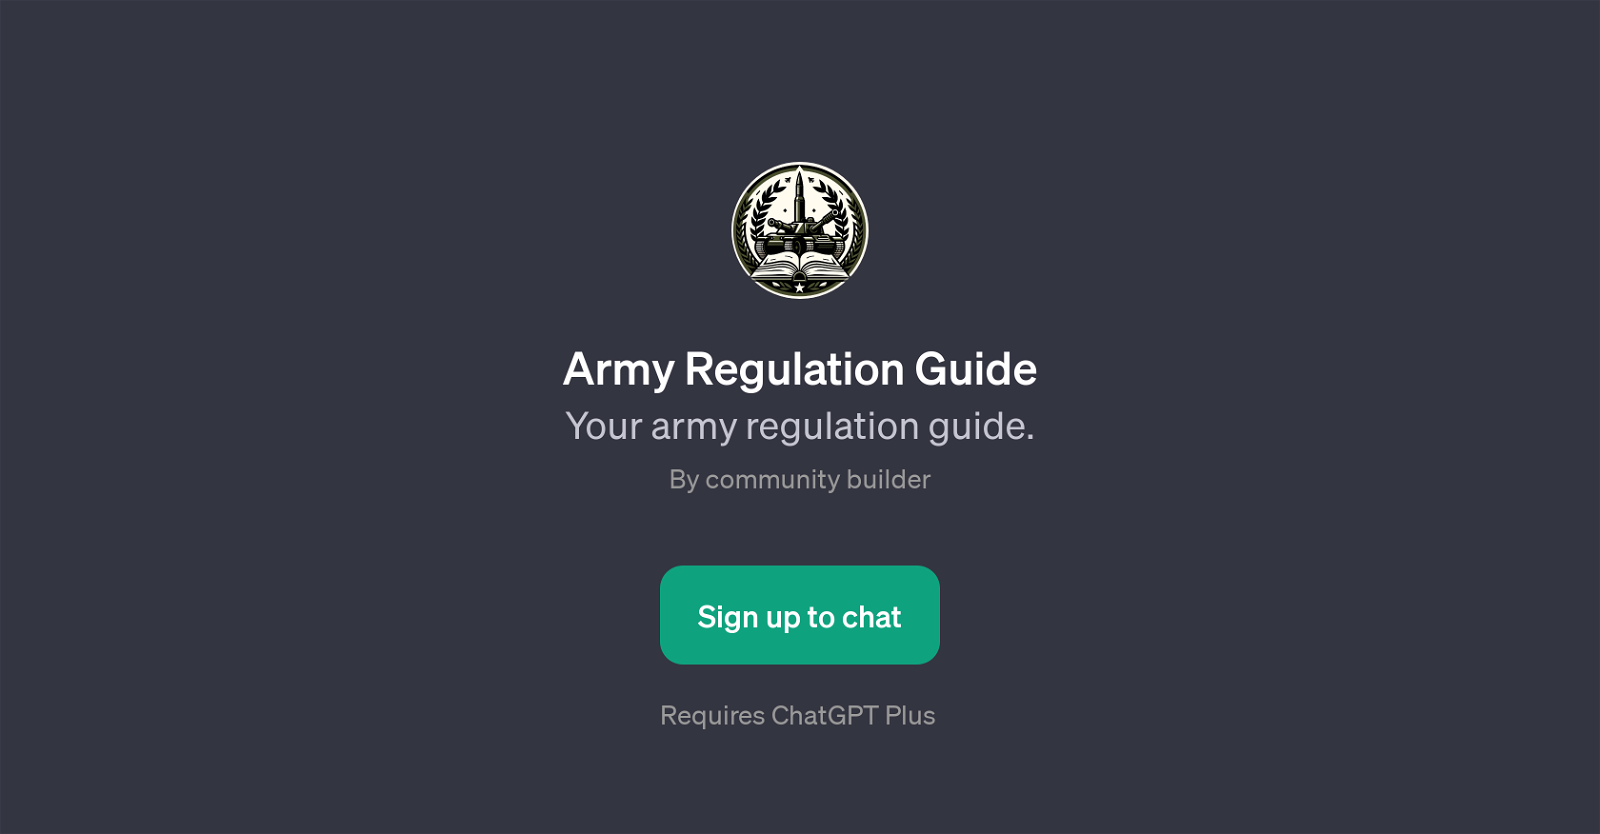 Army Regulation Guide website